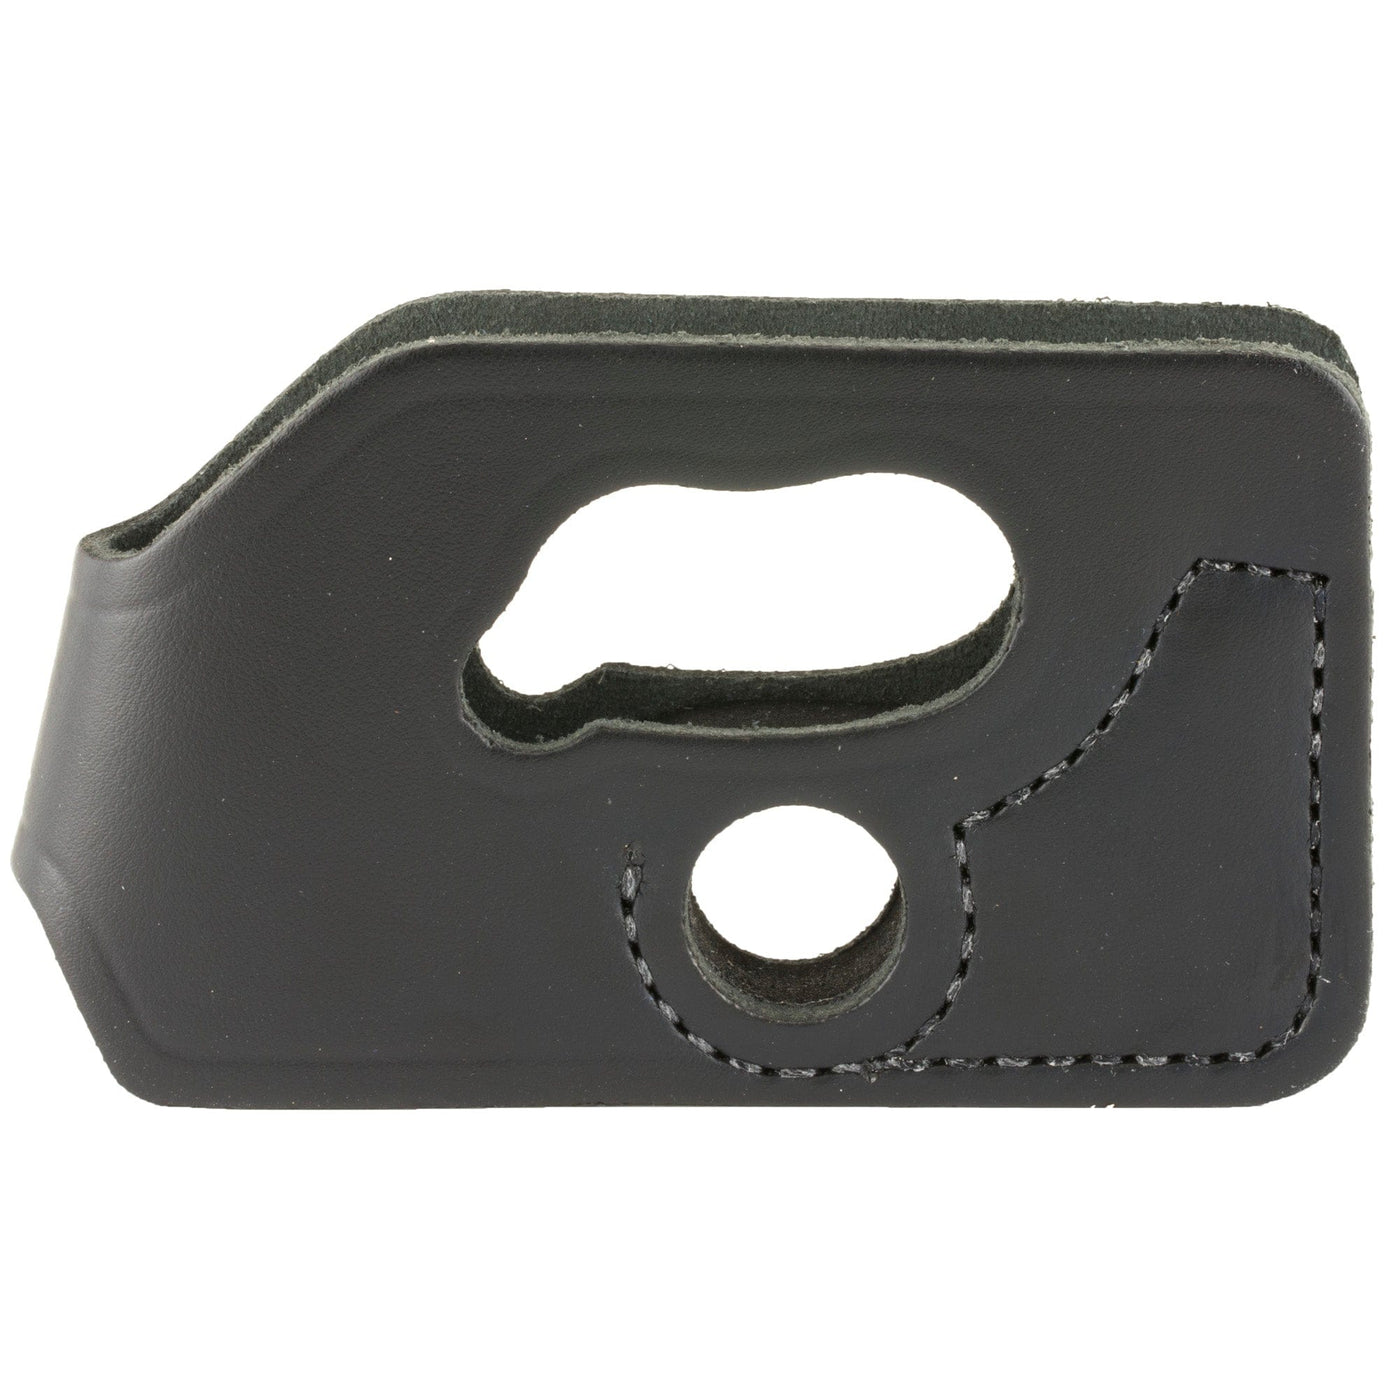 Desantis Gunhide Desantis Pocket Shot Holster - Ambi Leather Ruger Lcp Black Firearm Accessories